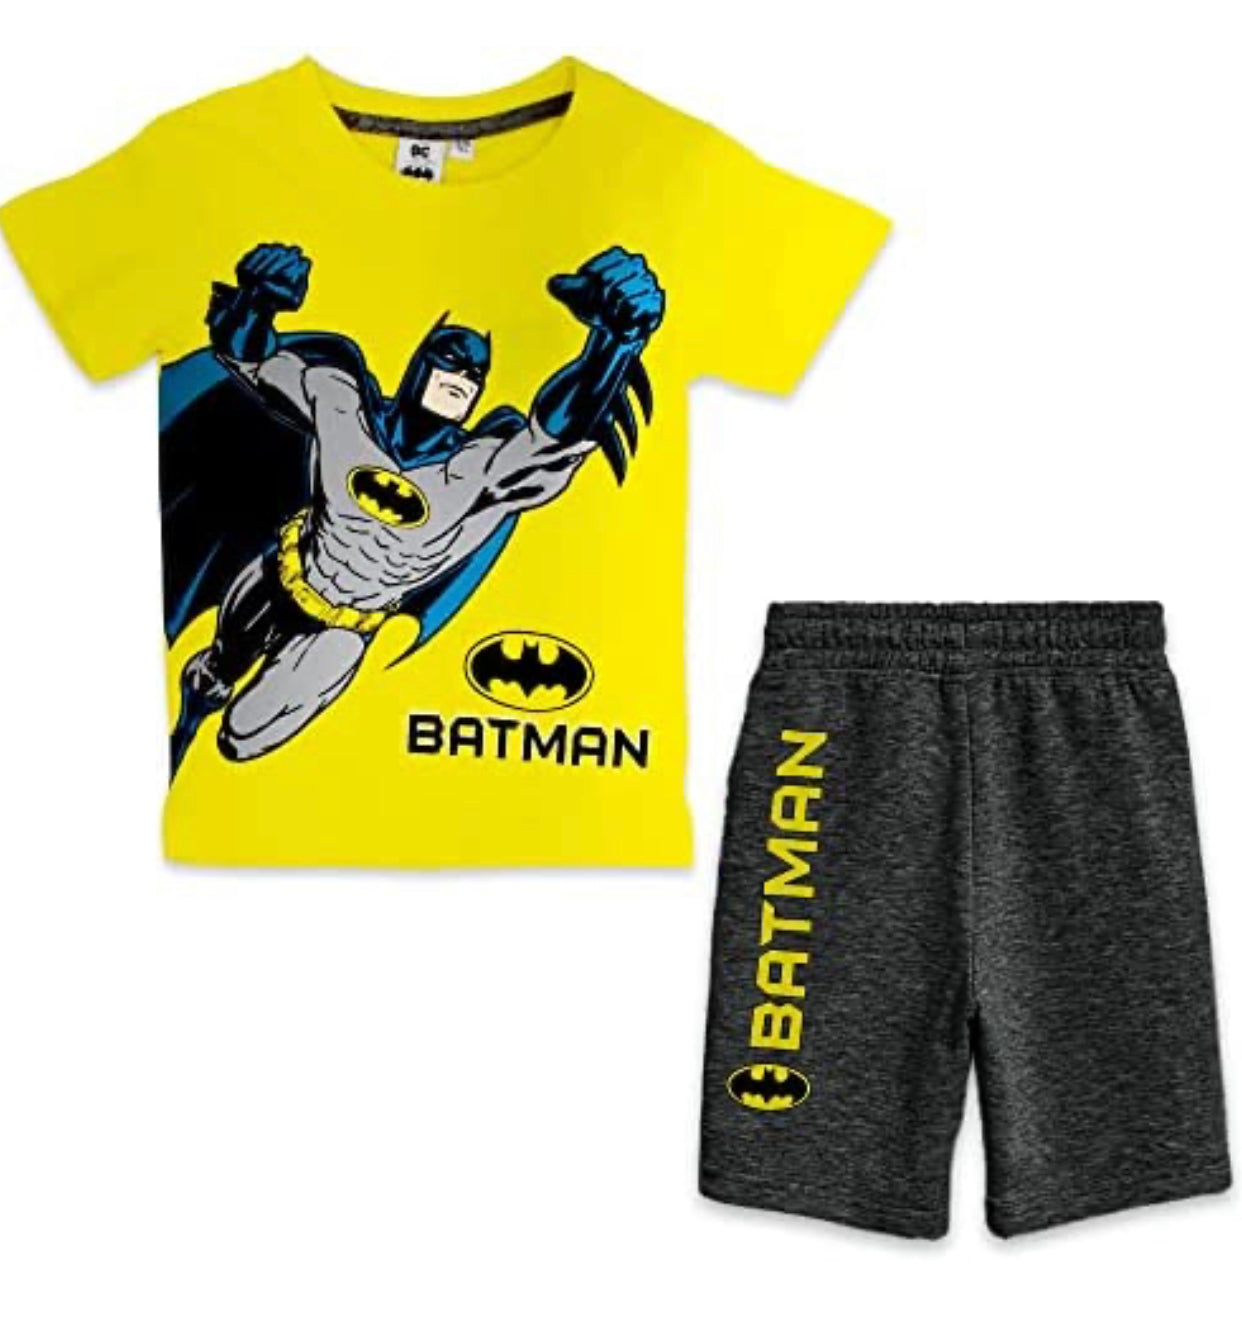 Batman Marvel®️ Character Boys T-shirt & Short Set for Kids Marvel High quality Cool Graphic printed T-Shirt & Short Set